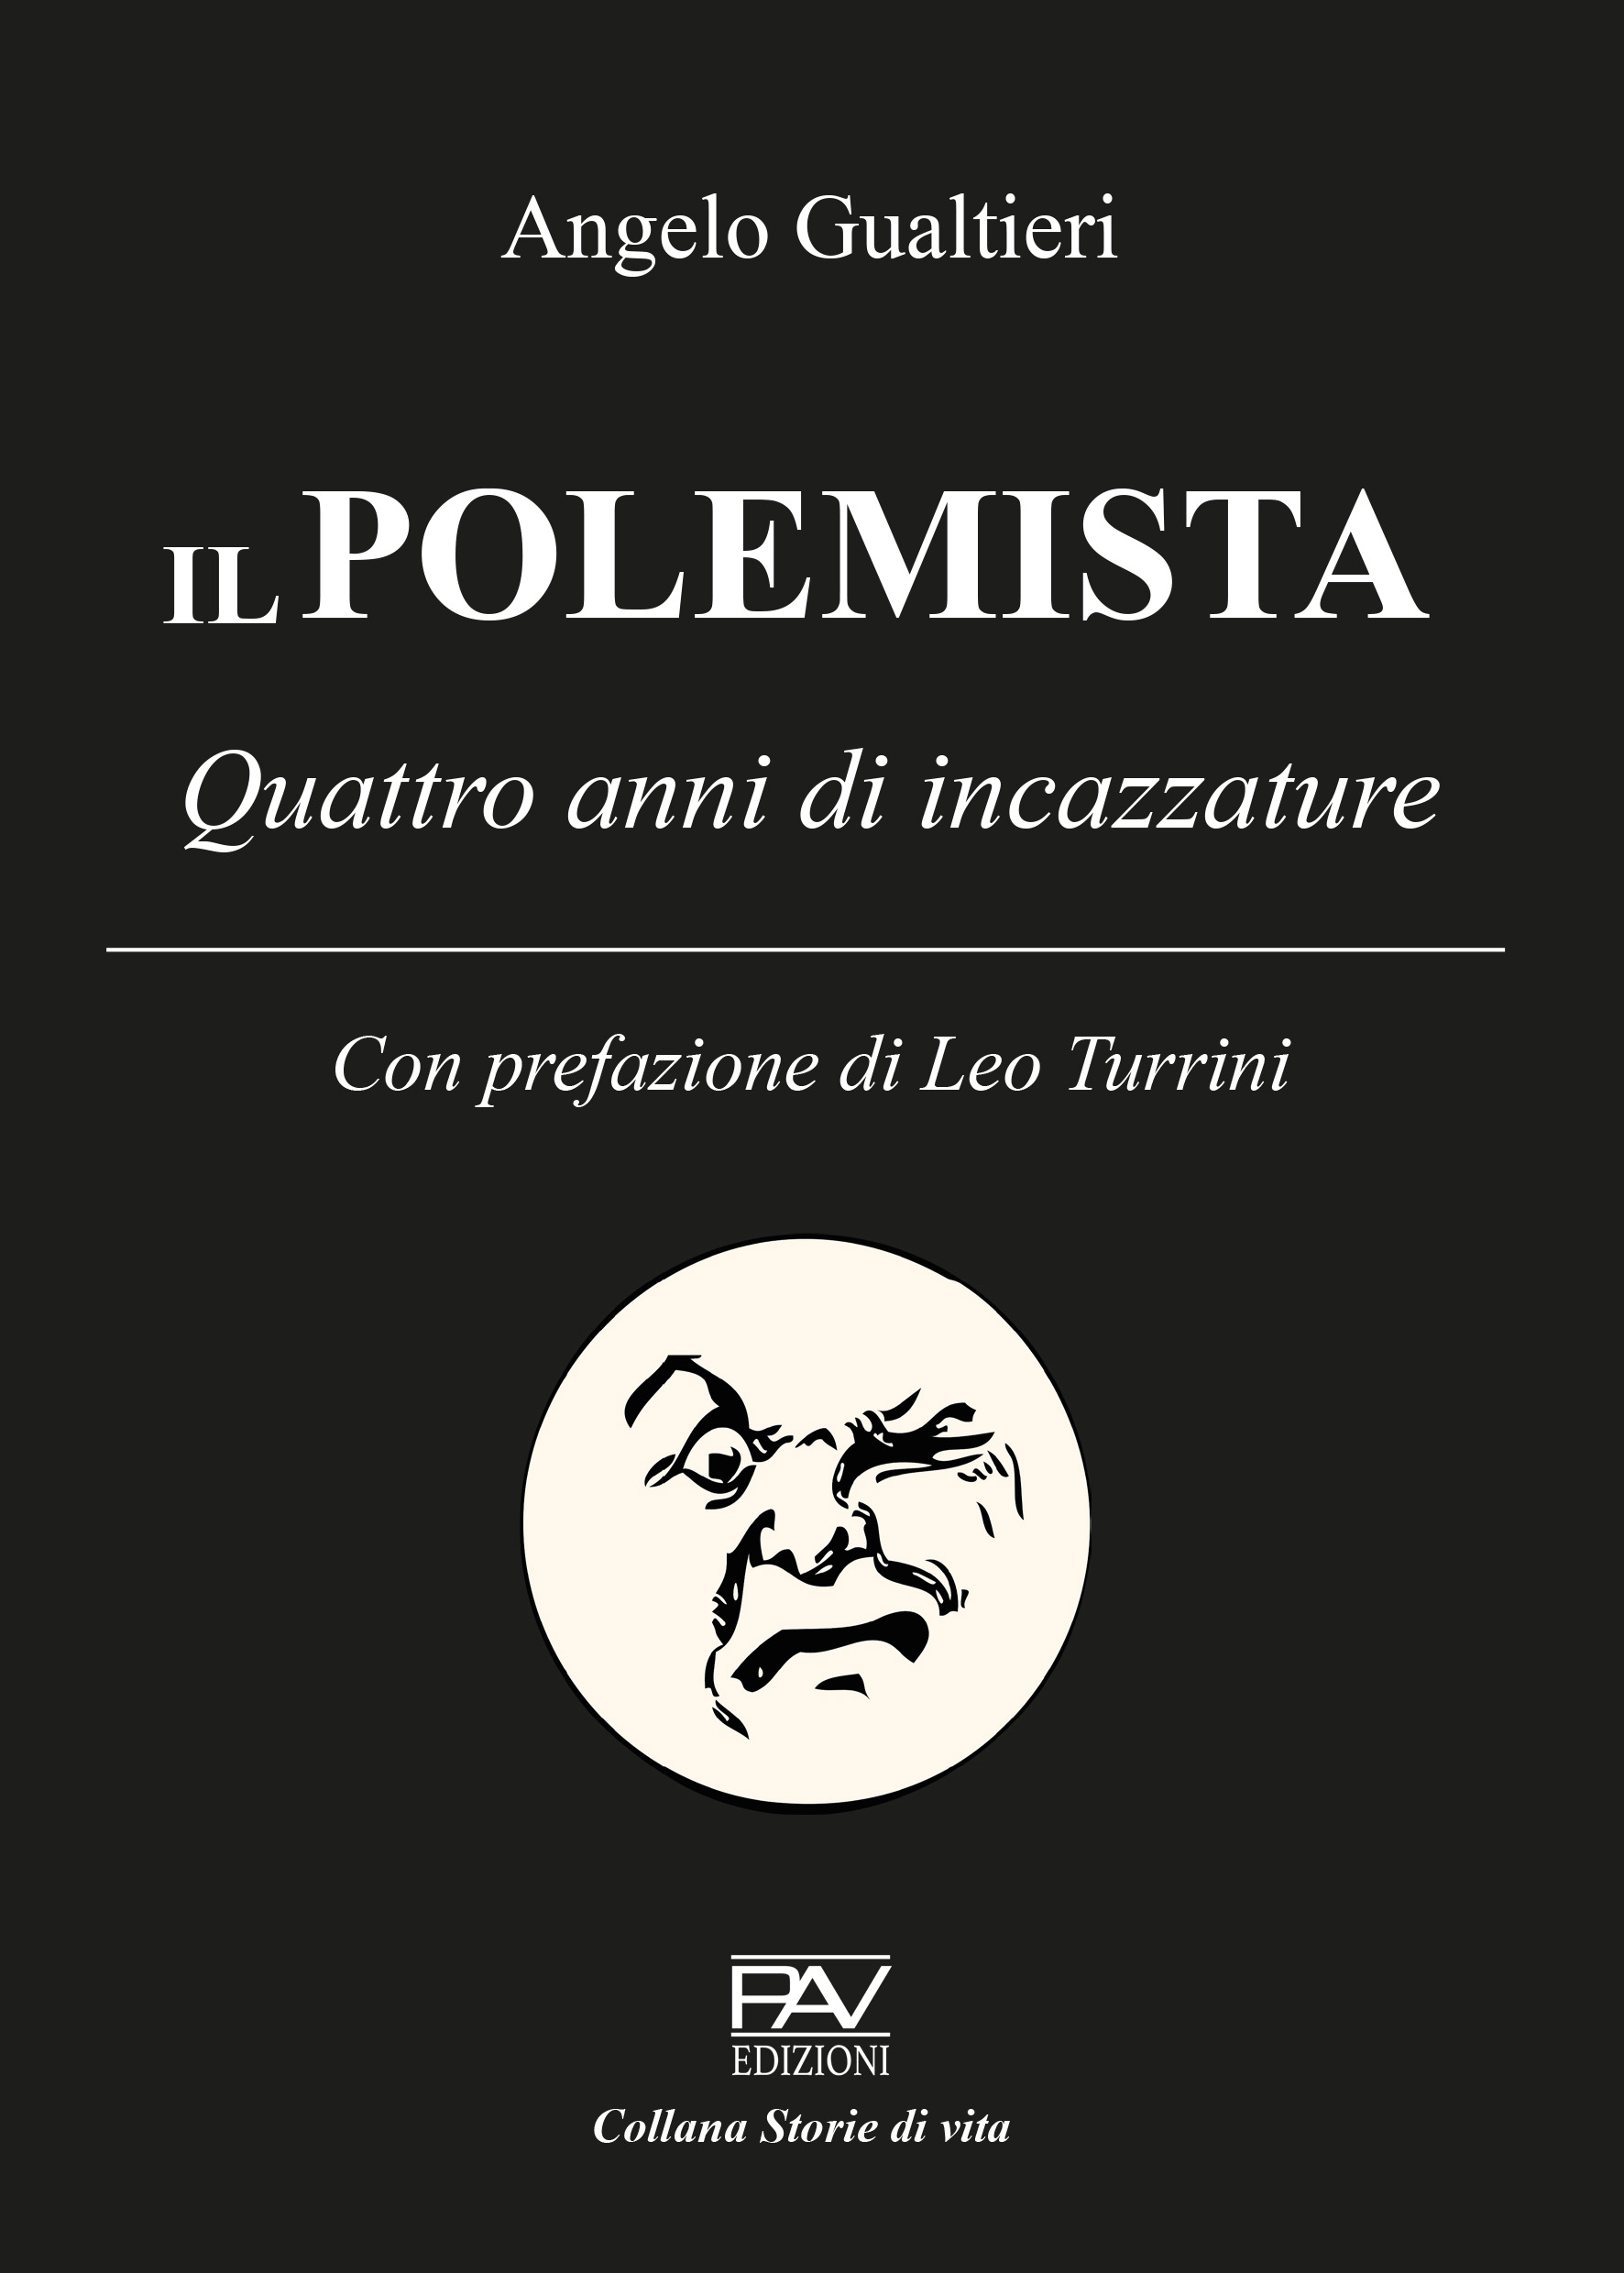 Il Polemista, Pav edizioni